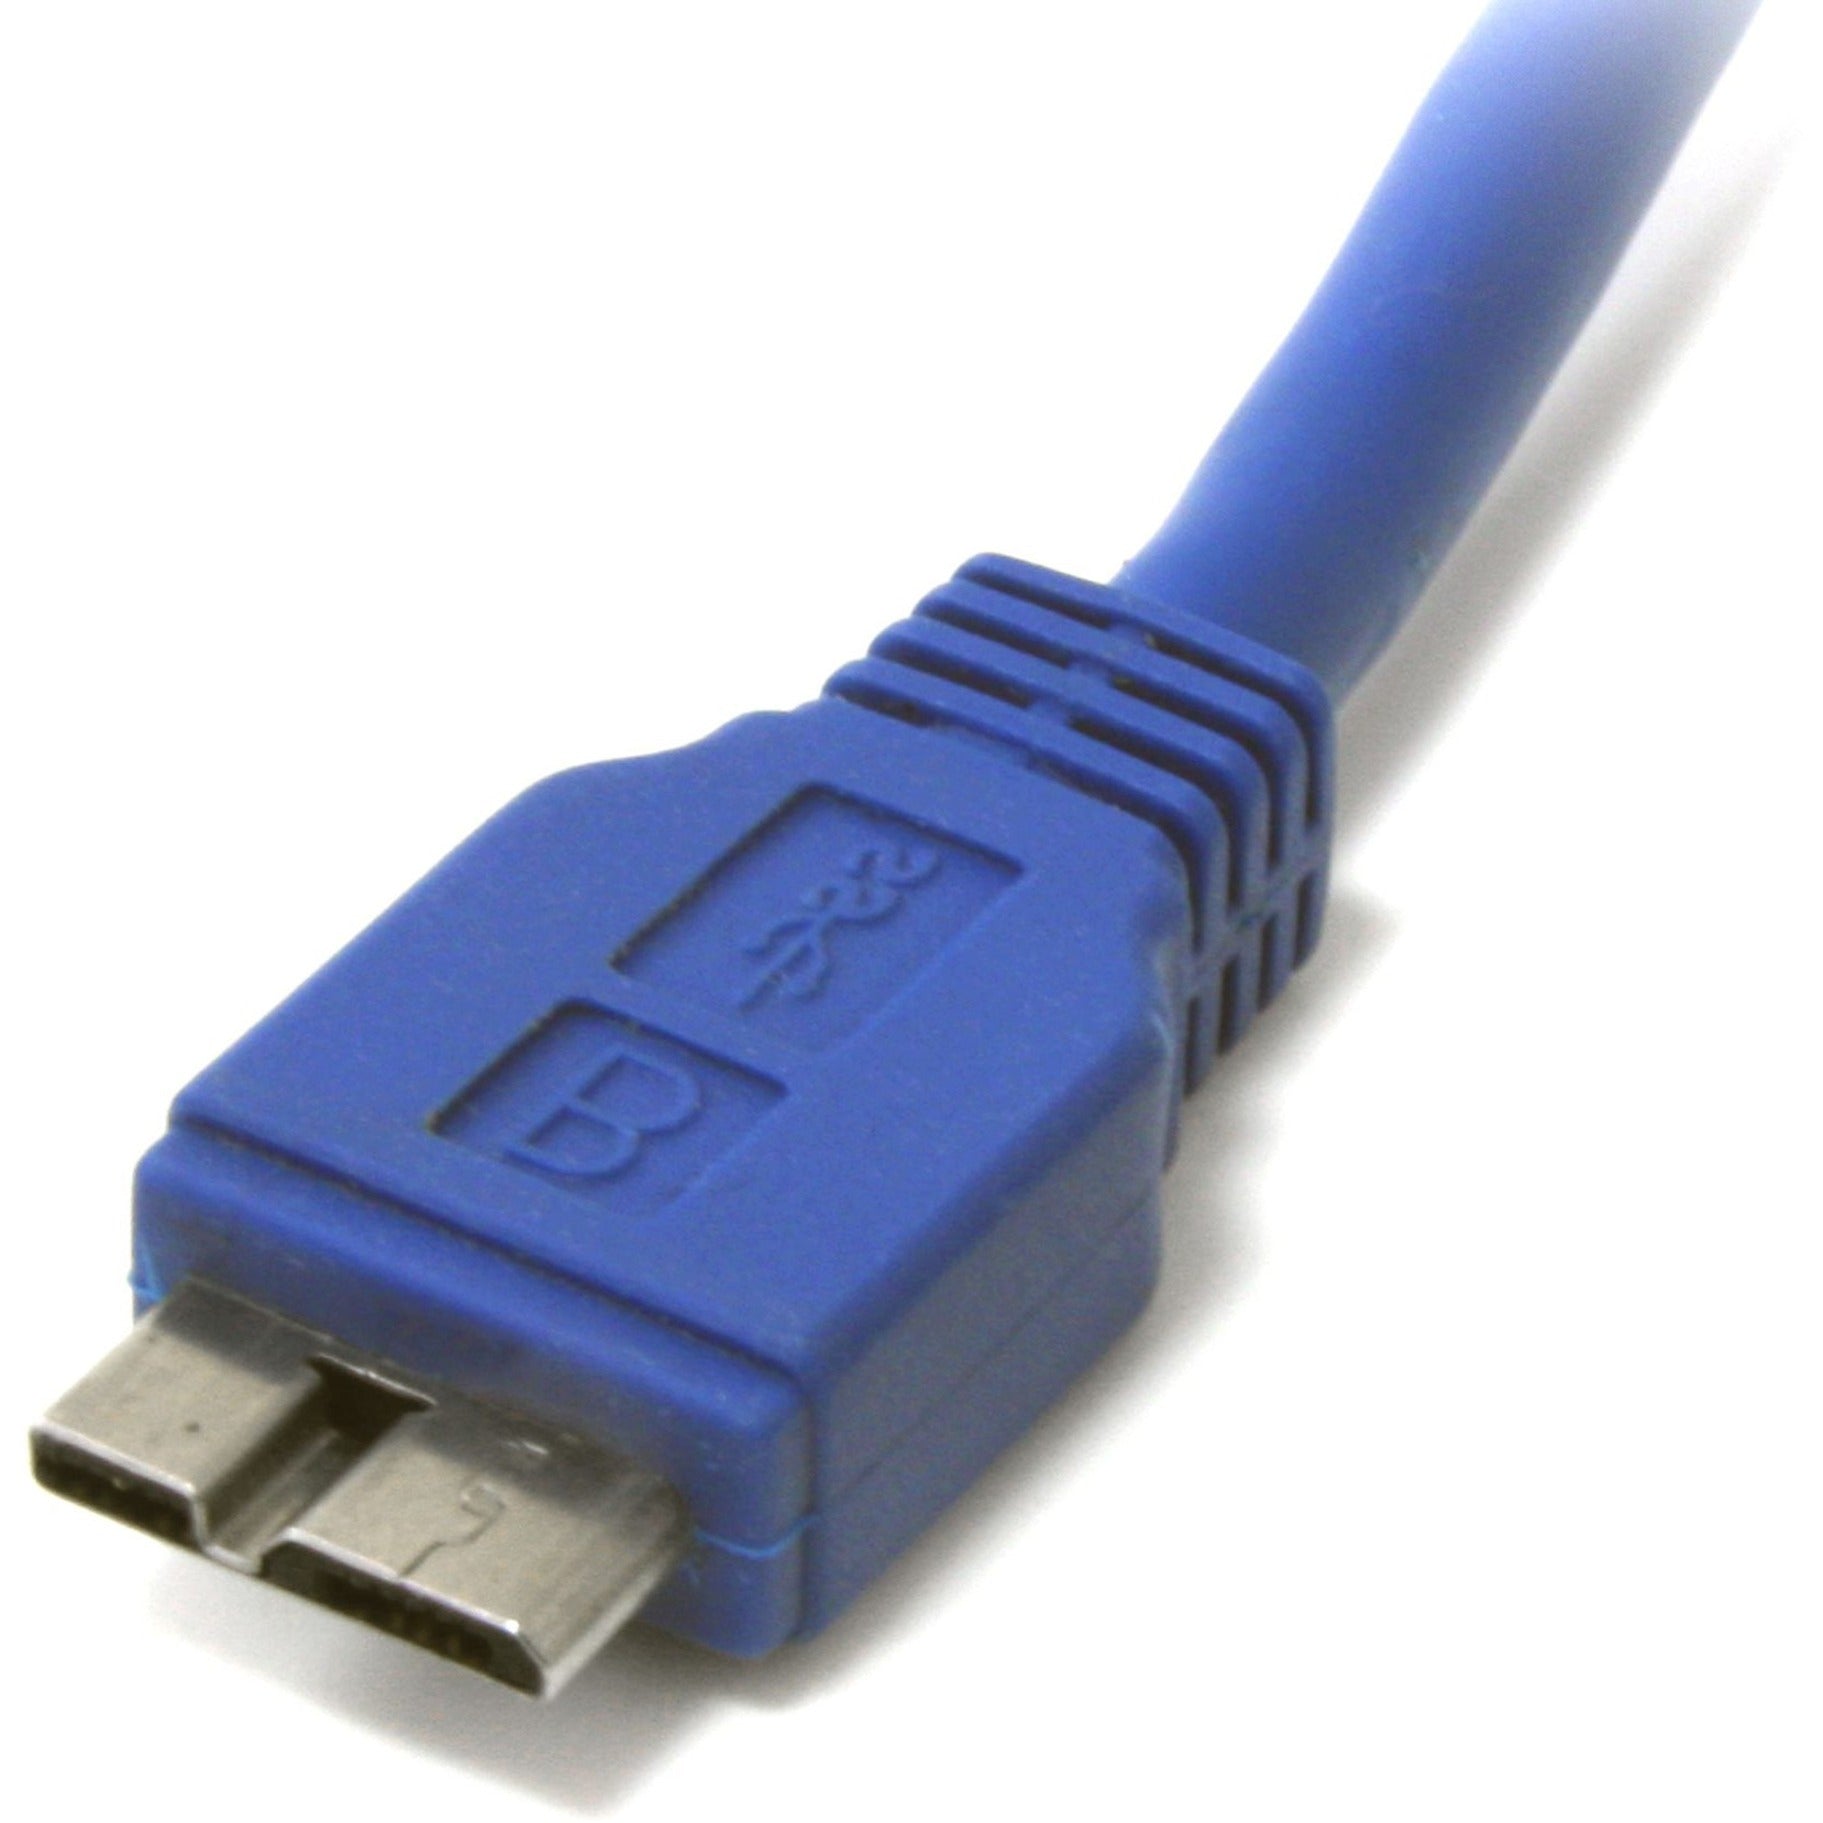 StarTech.com -> 星美科技 USB3SAUB3 -> USB3SAUB3 3 ft -> 3 英尺 SuperSpeed -> 超高速 USB 3.0 Cable -> USB 3.0 线缆 A to Micro B -> A 到 Micro B High-Speed Data Transfer -> 高速数据传输 EMI Protection -> 电磁干扰保护 Strain Relief -> 缓解张力